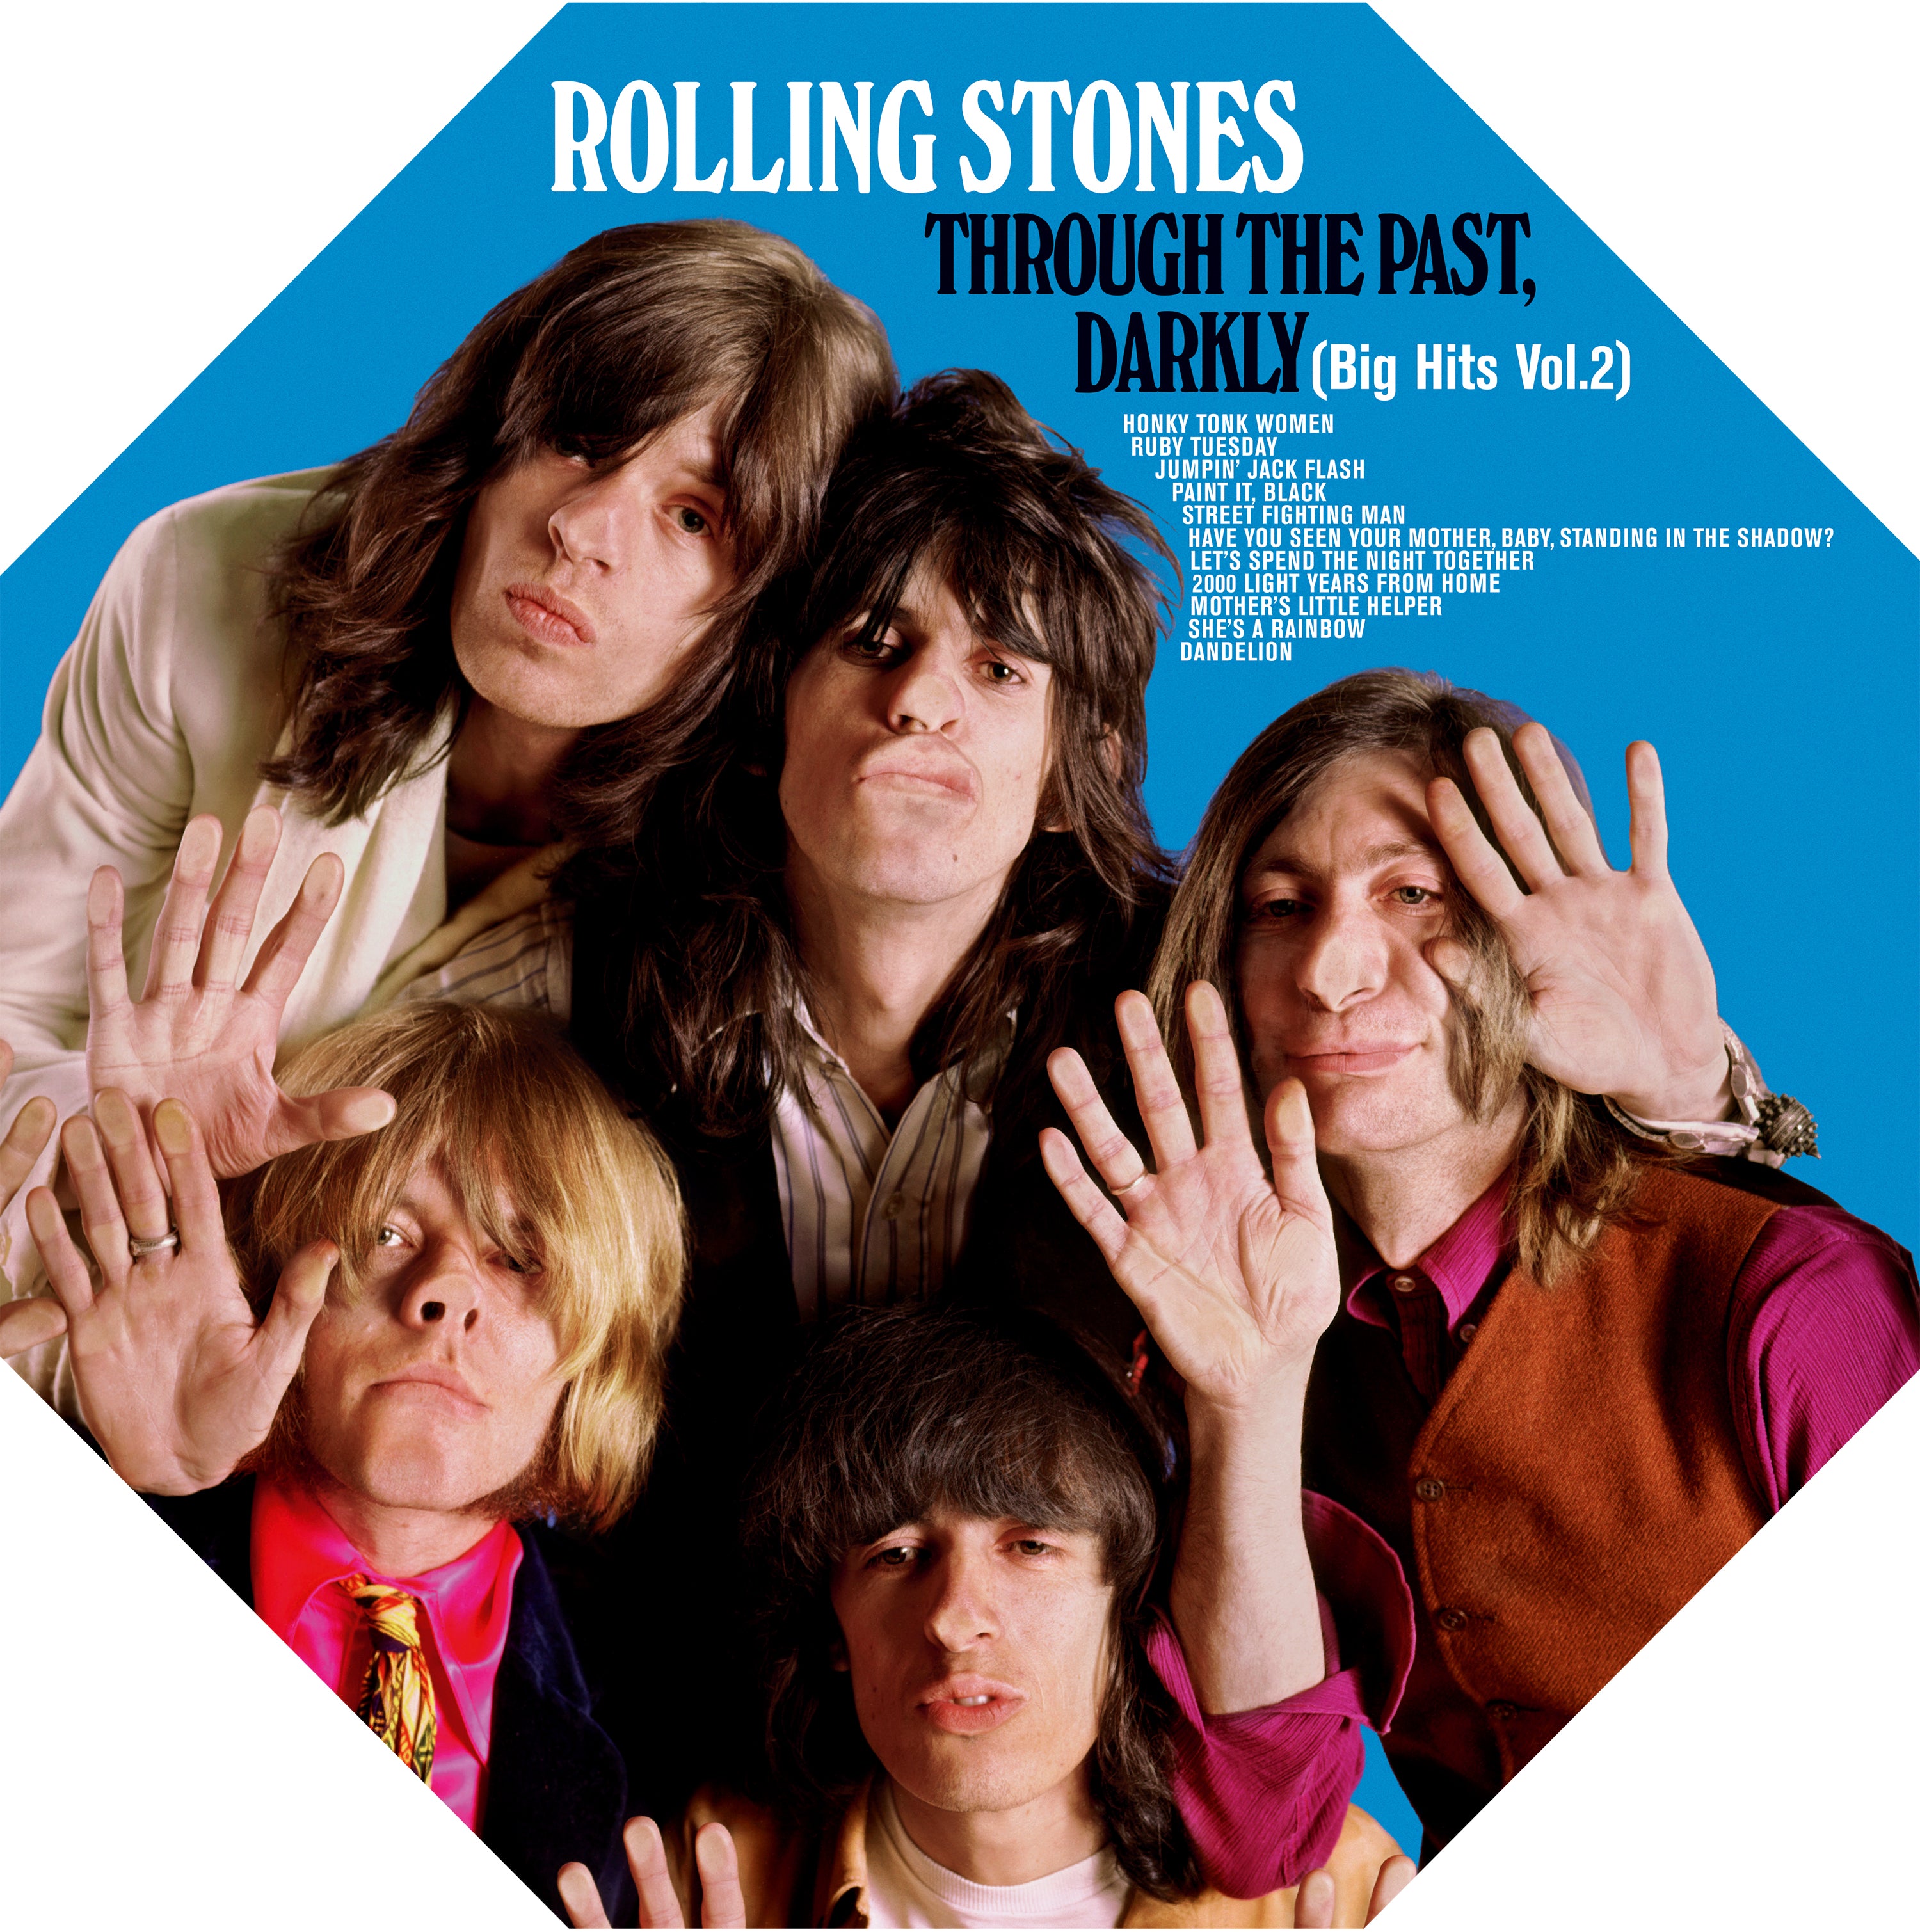 The Rolling Stones - Through The Past, Darkly (Big Hits Vol 2 - US): Vinyl LP